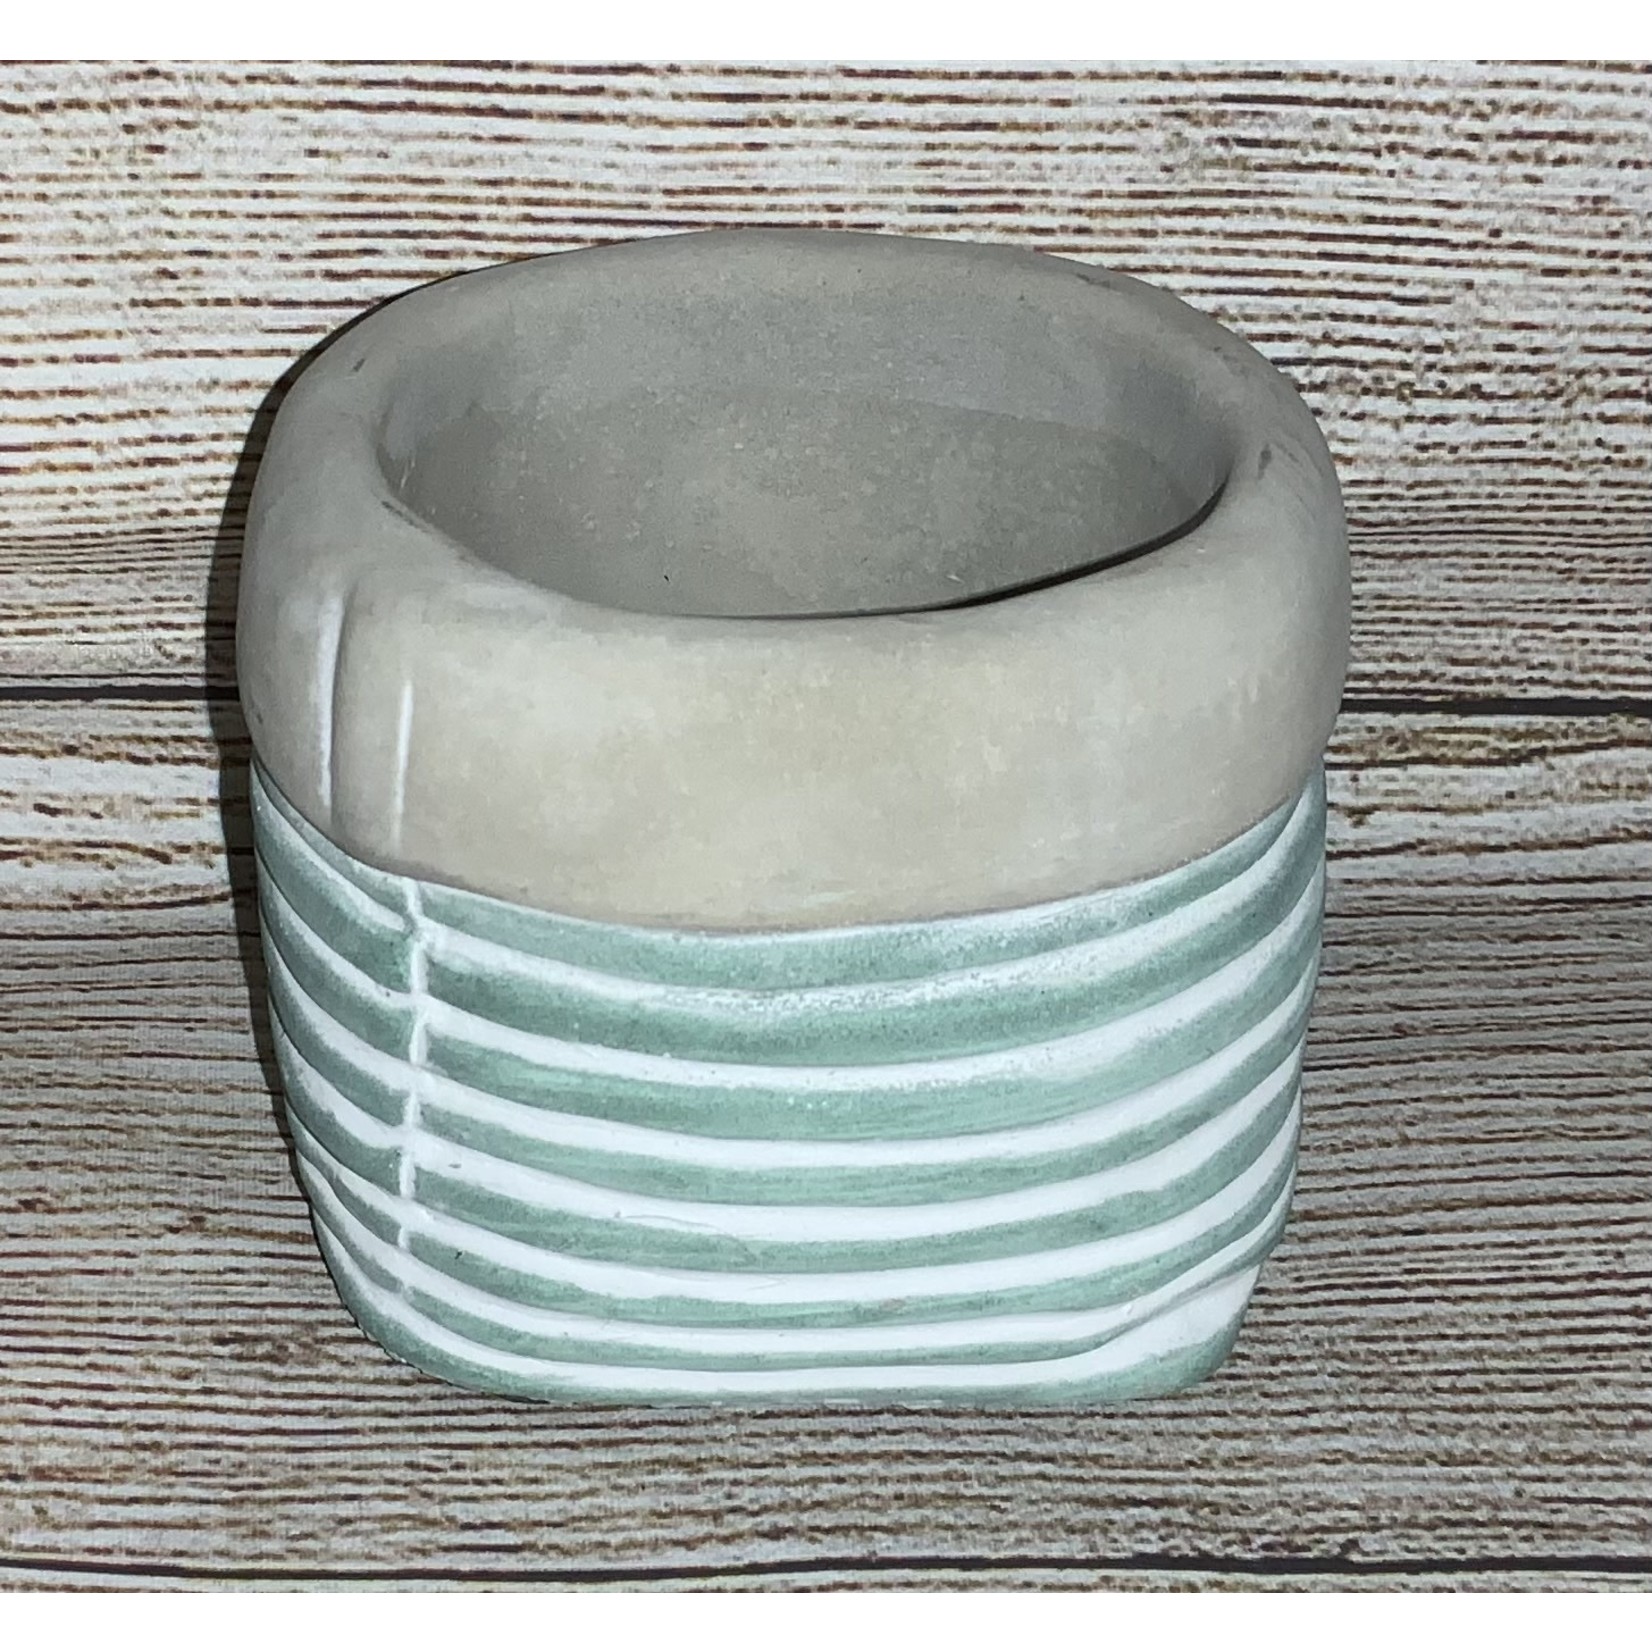 Meravic Teal & White Striped Pot